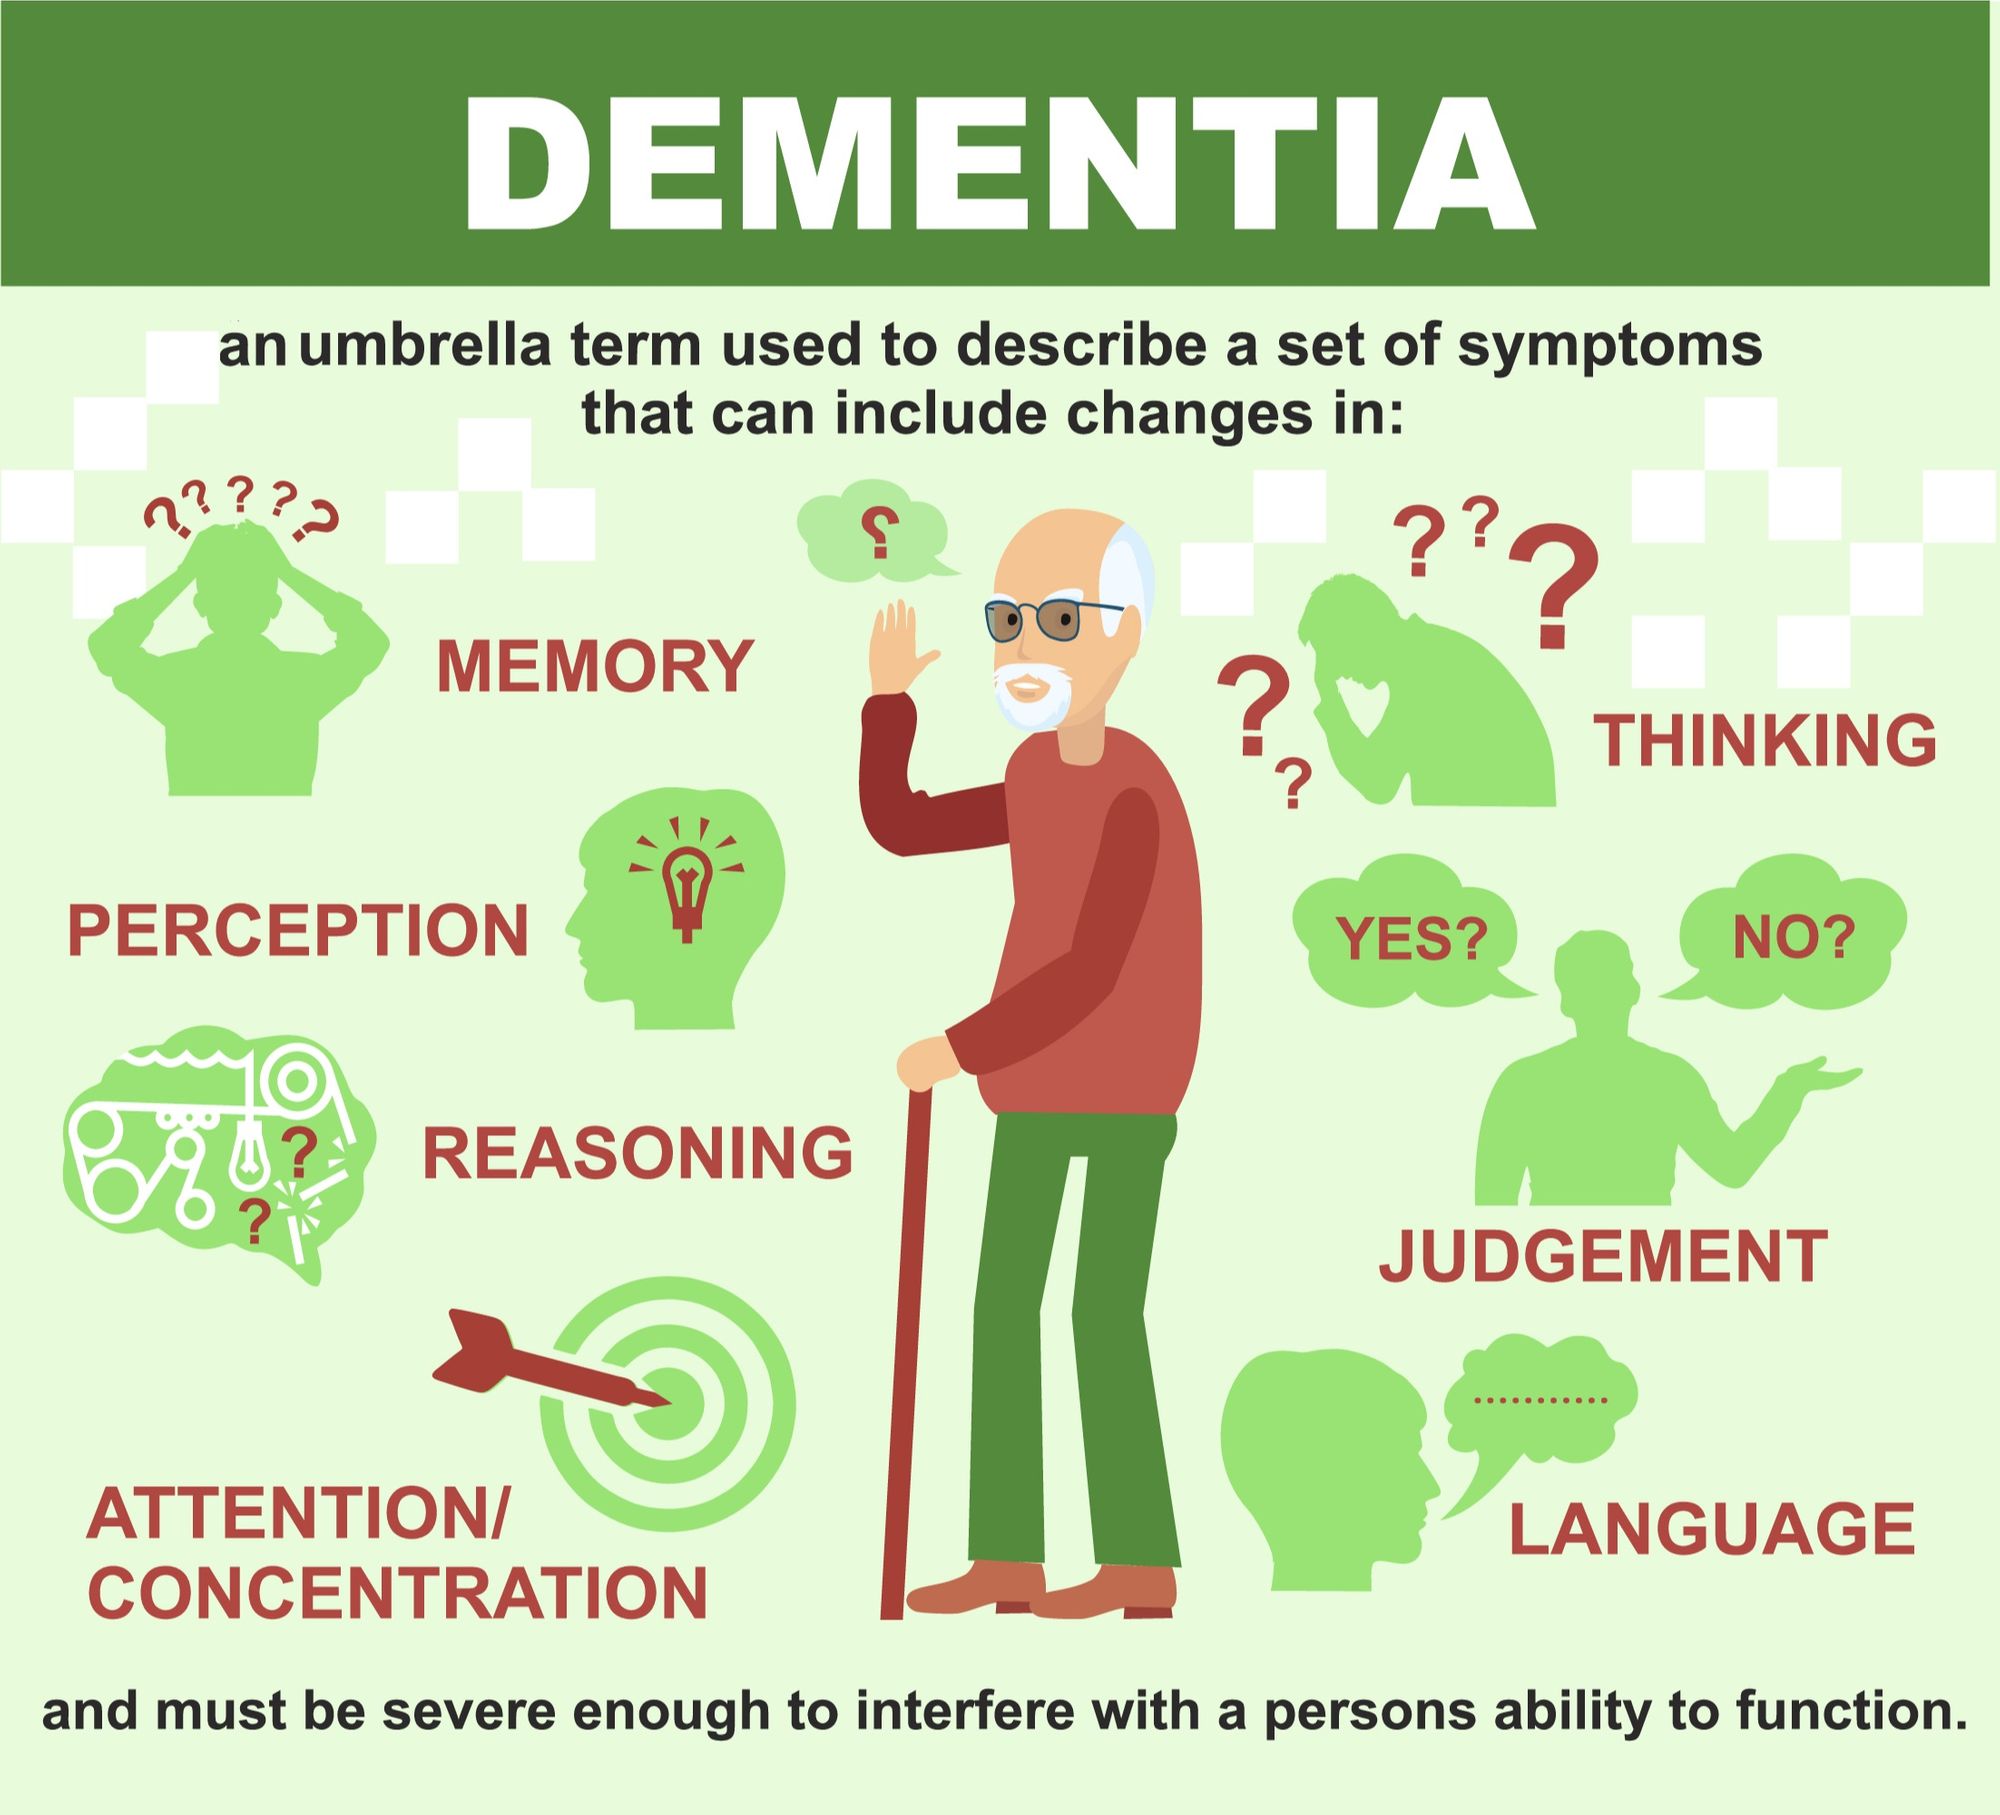 Symptoms of Dementia